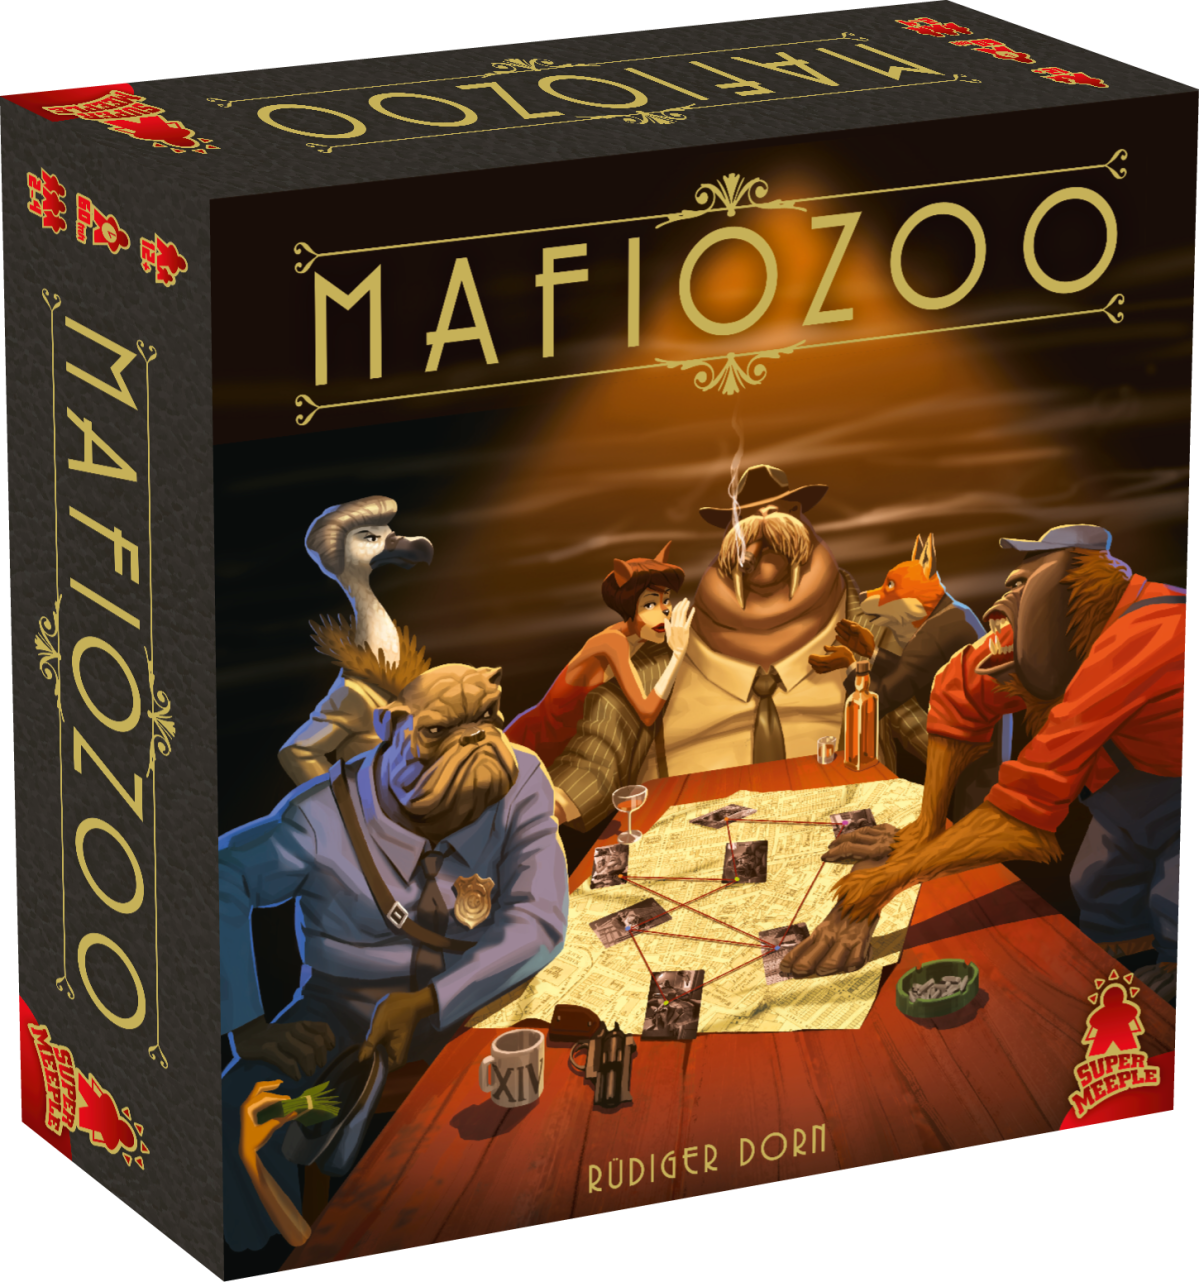 mafiozoo-box3d